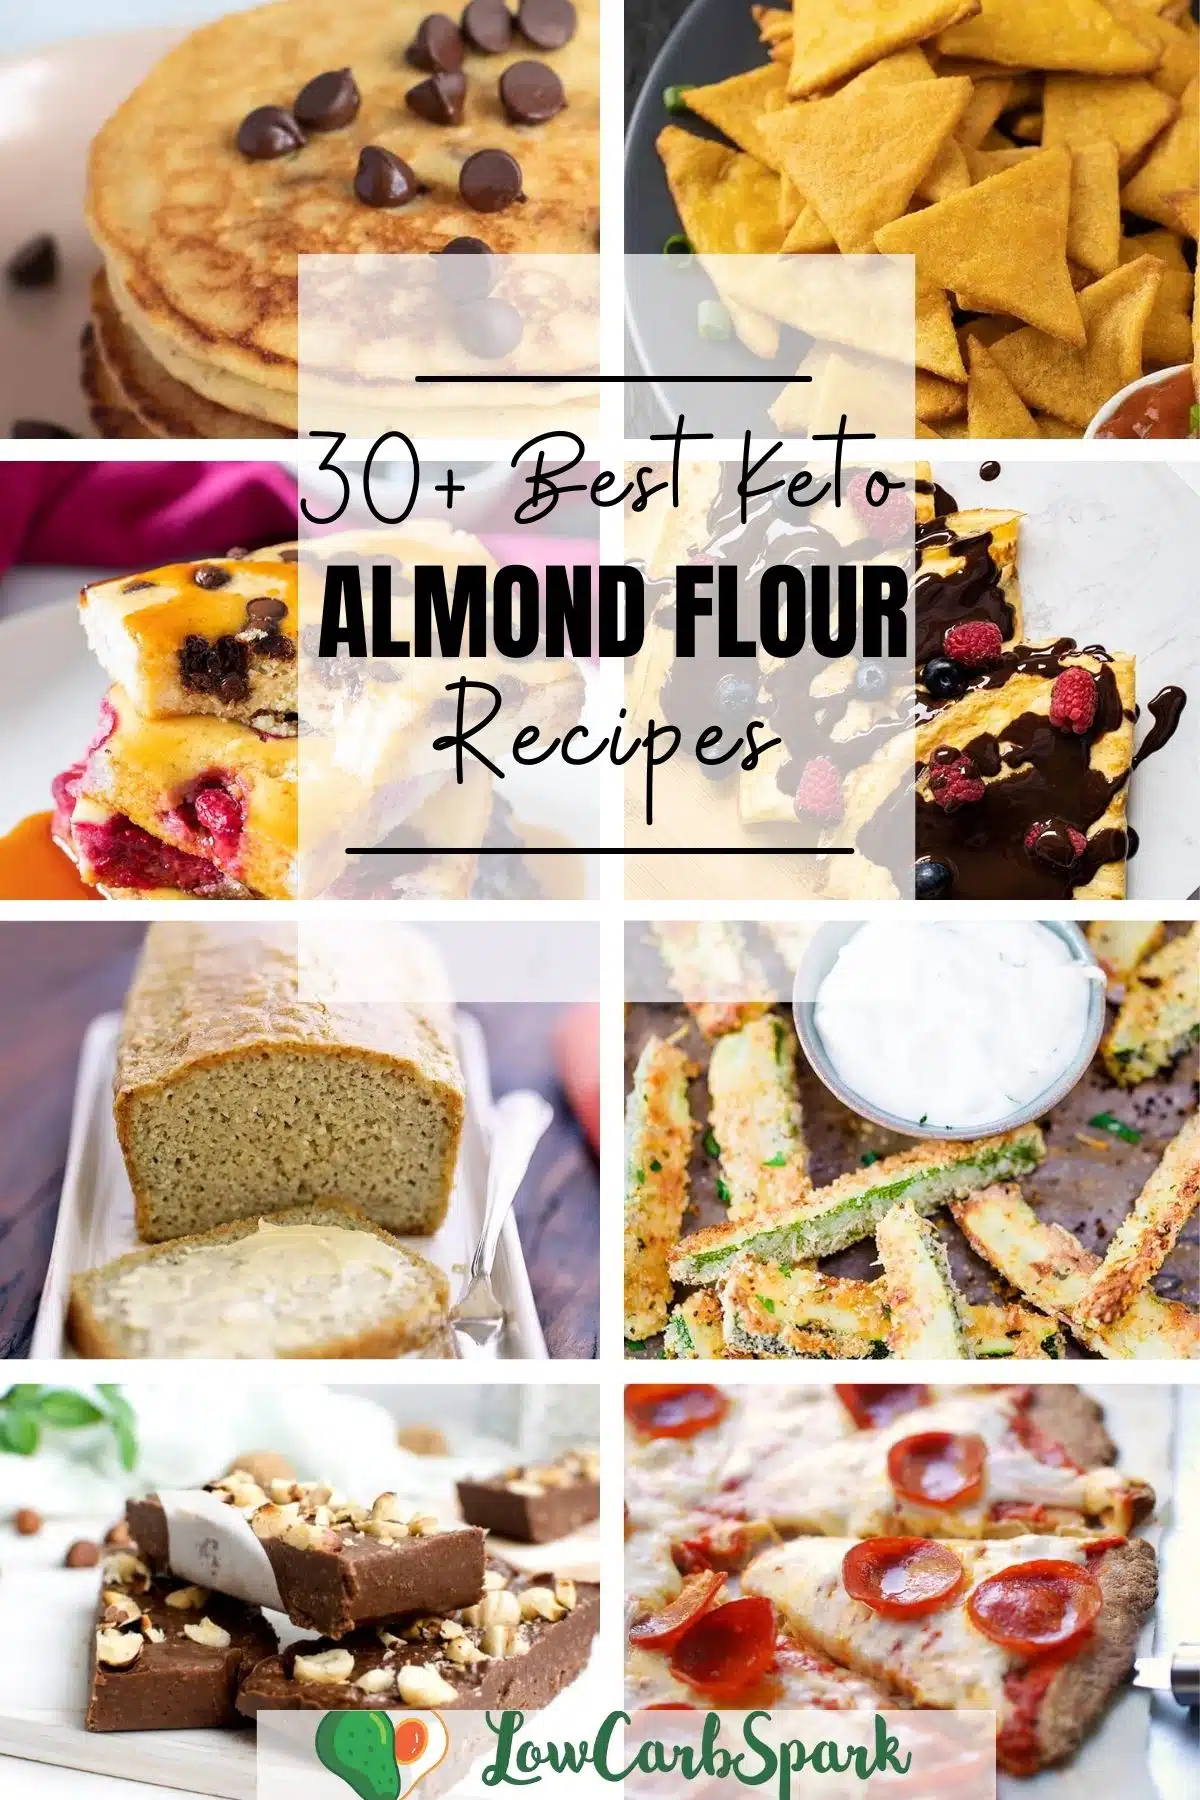 30+ Best Keto Almond Flour Recipes